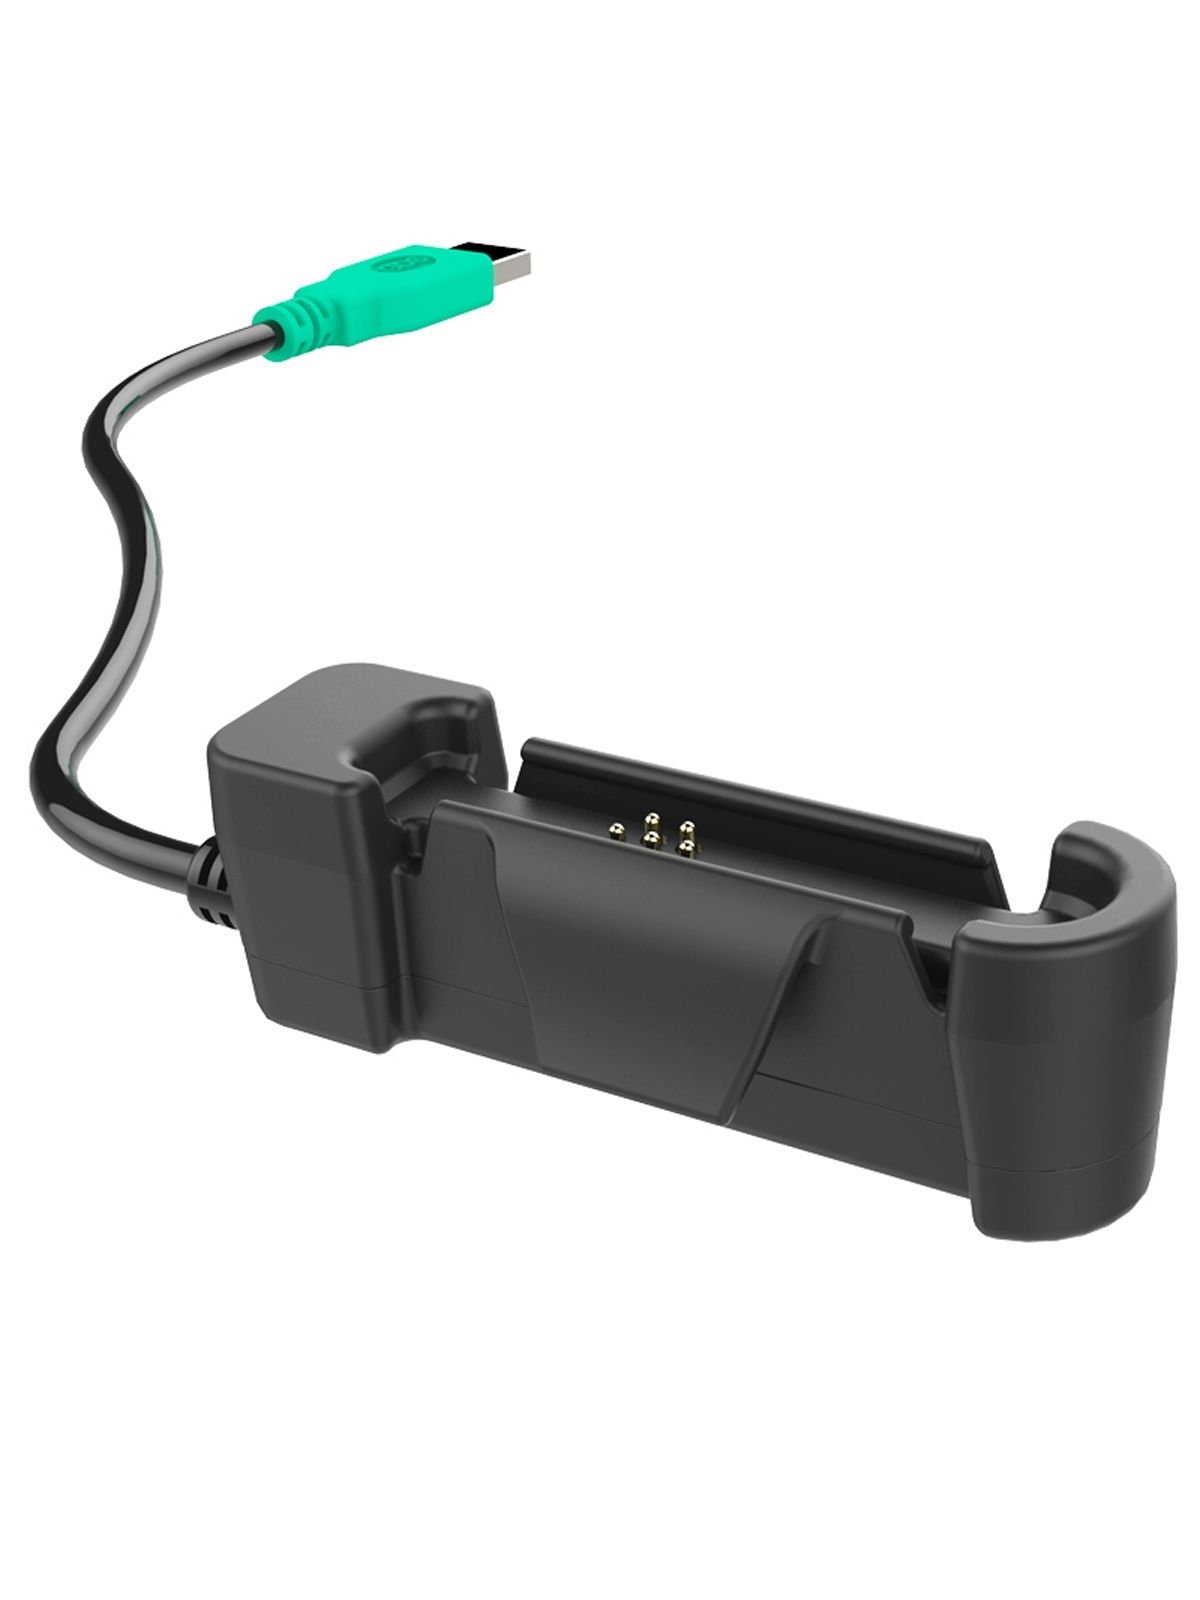 RAM Mounts GDS Snap-Con Ladesockel für IntelliSkin-Lade-/Schutzhüllen - integriertes USB 2.0 Kabel